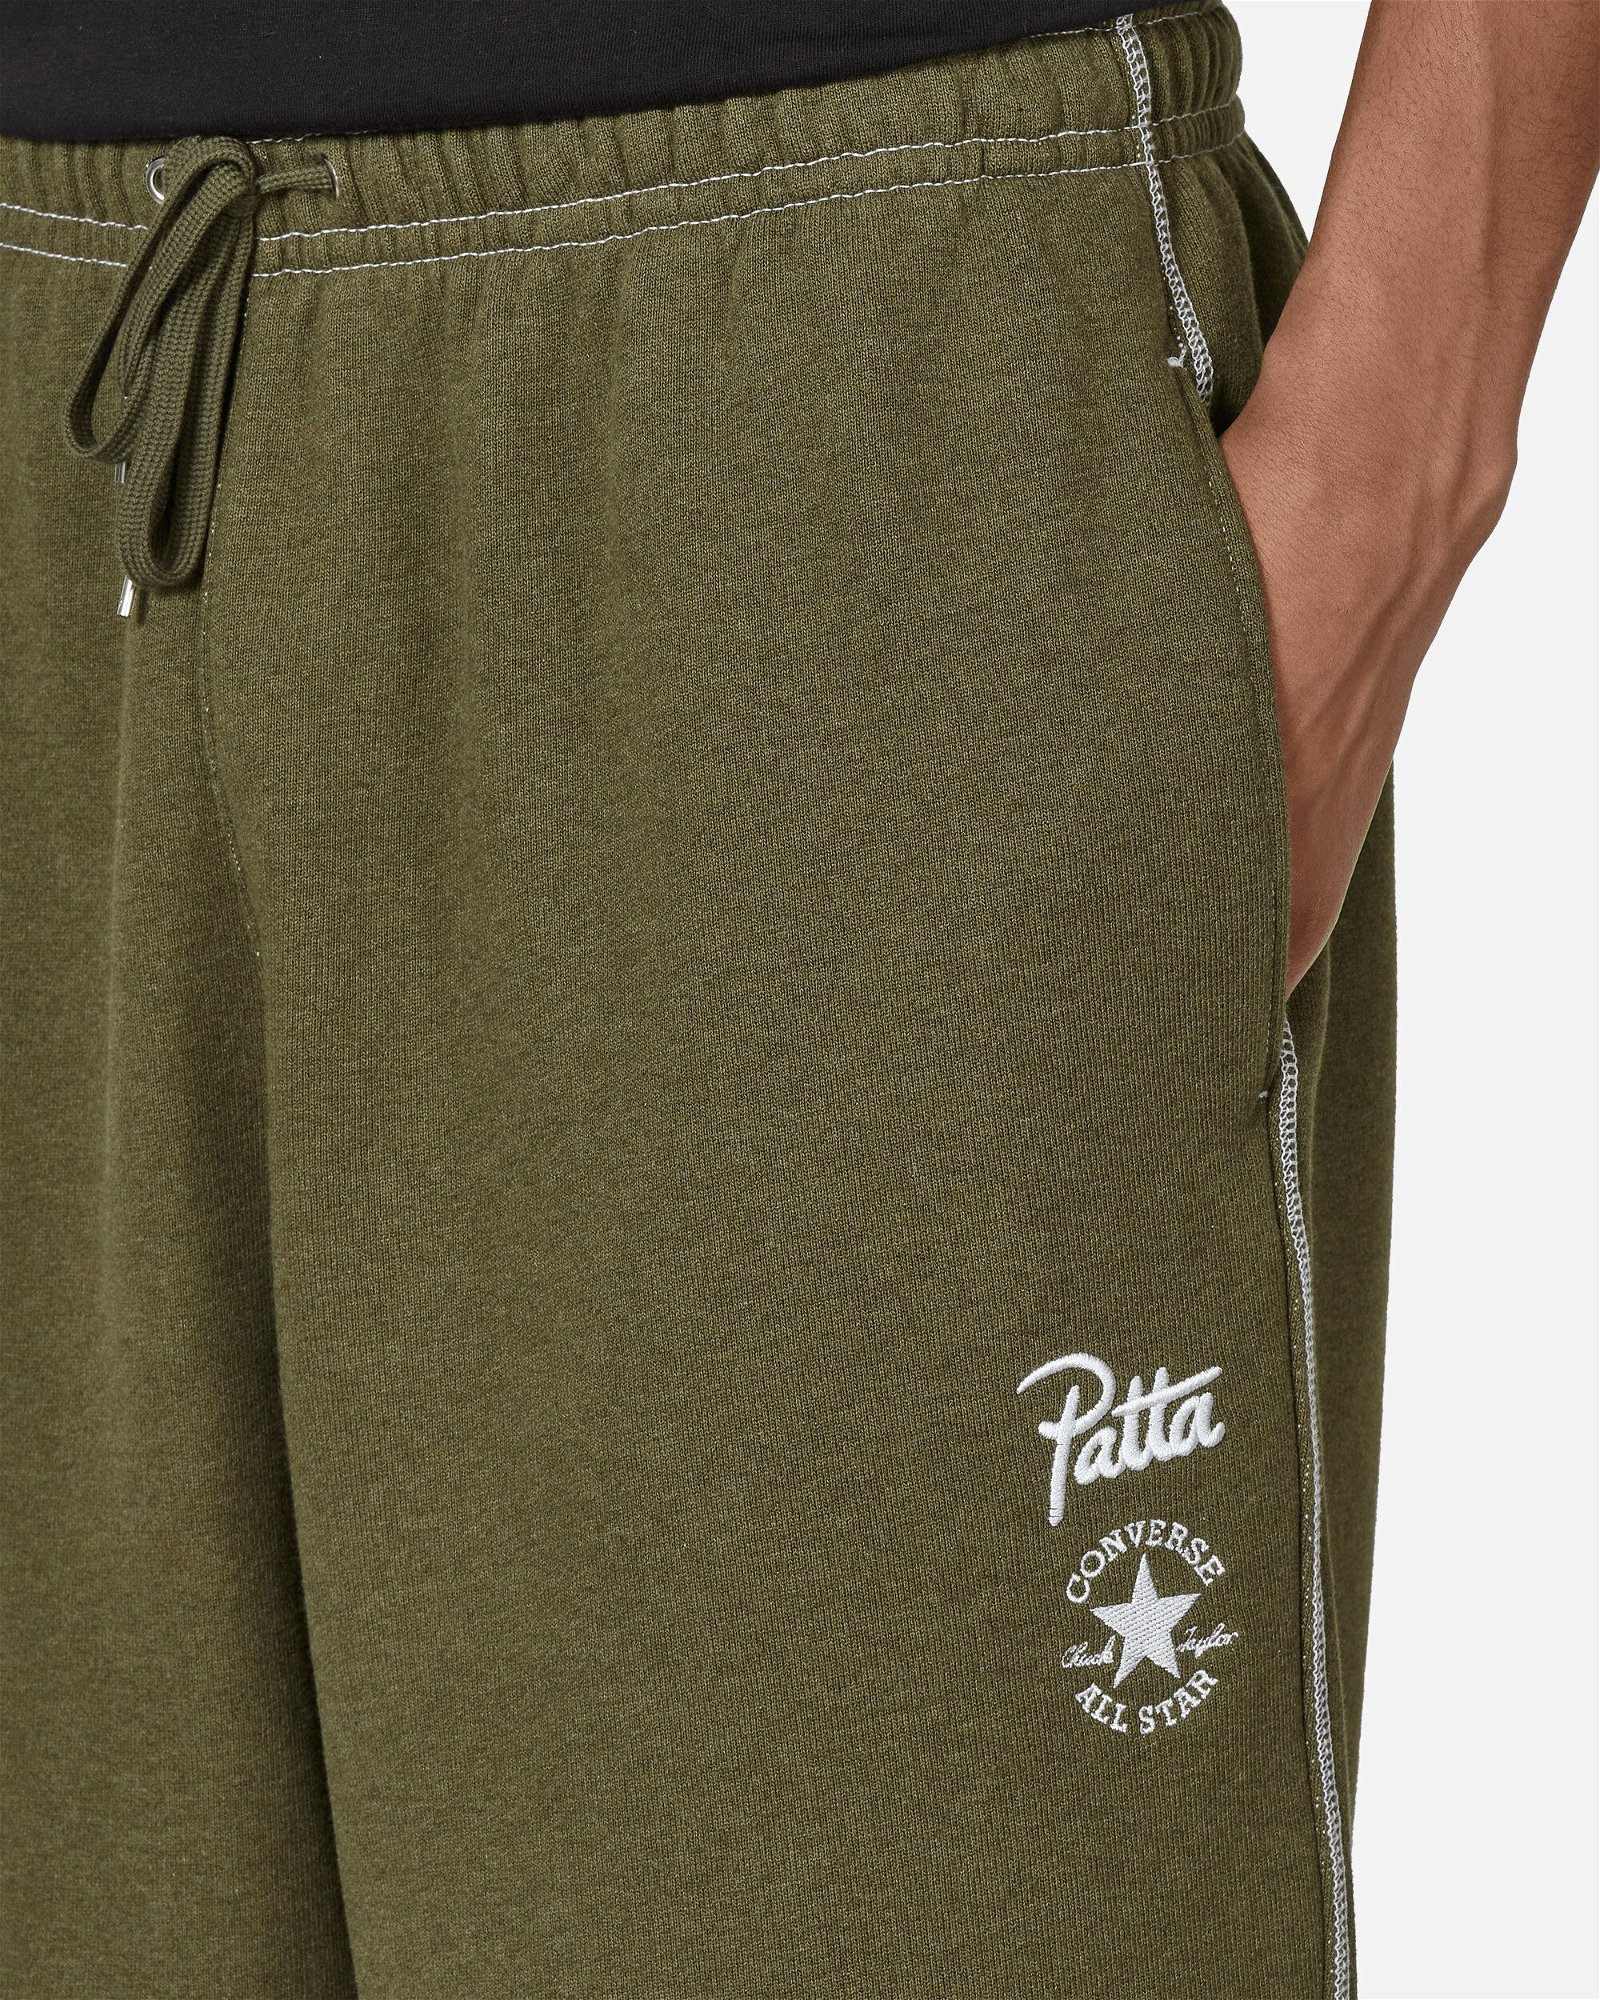 Patta Gold Standard Pants Utility Green Heather